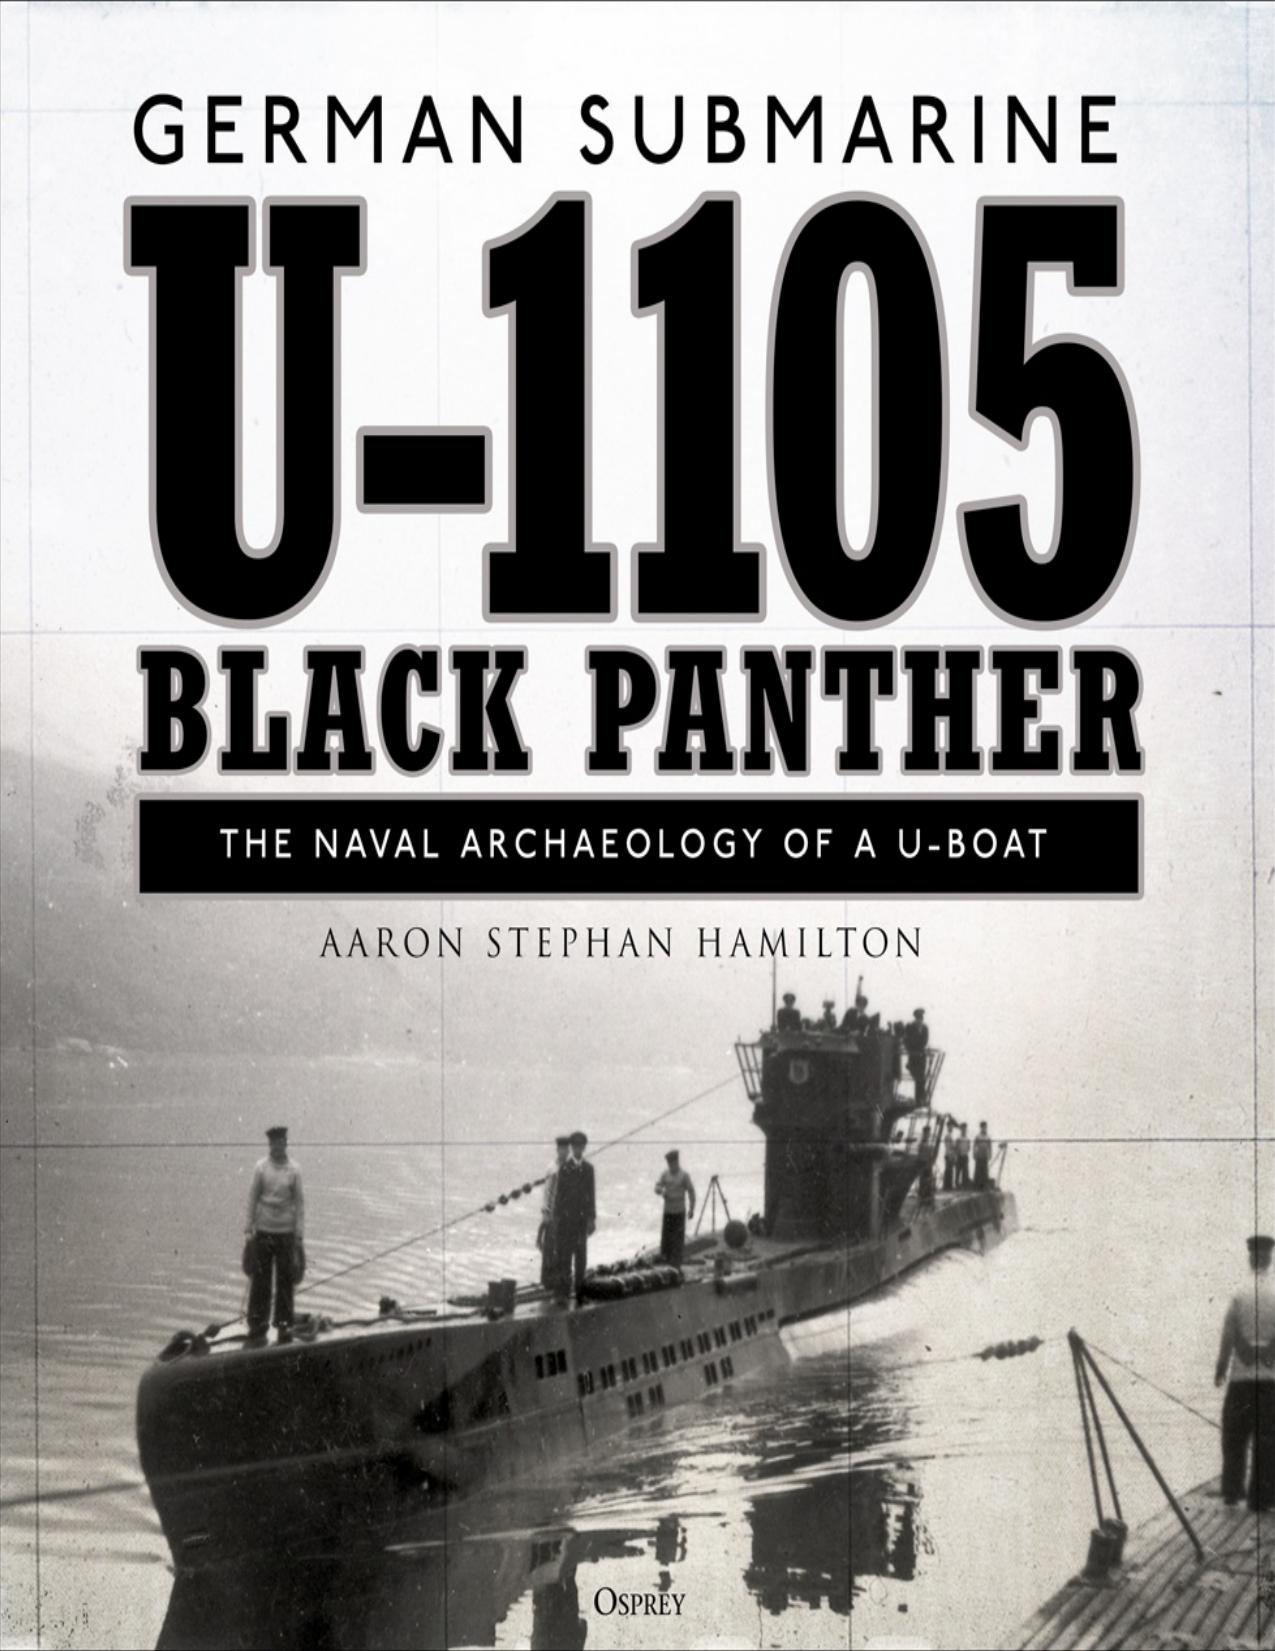 German submarine U-1105 'Black Panther' by Aaron Stephan Hamilton